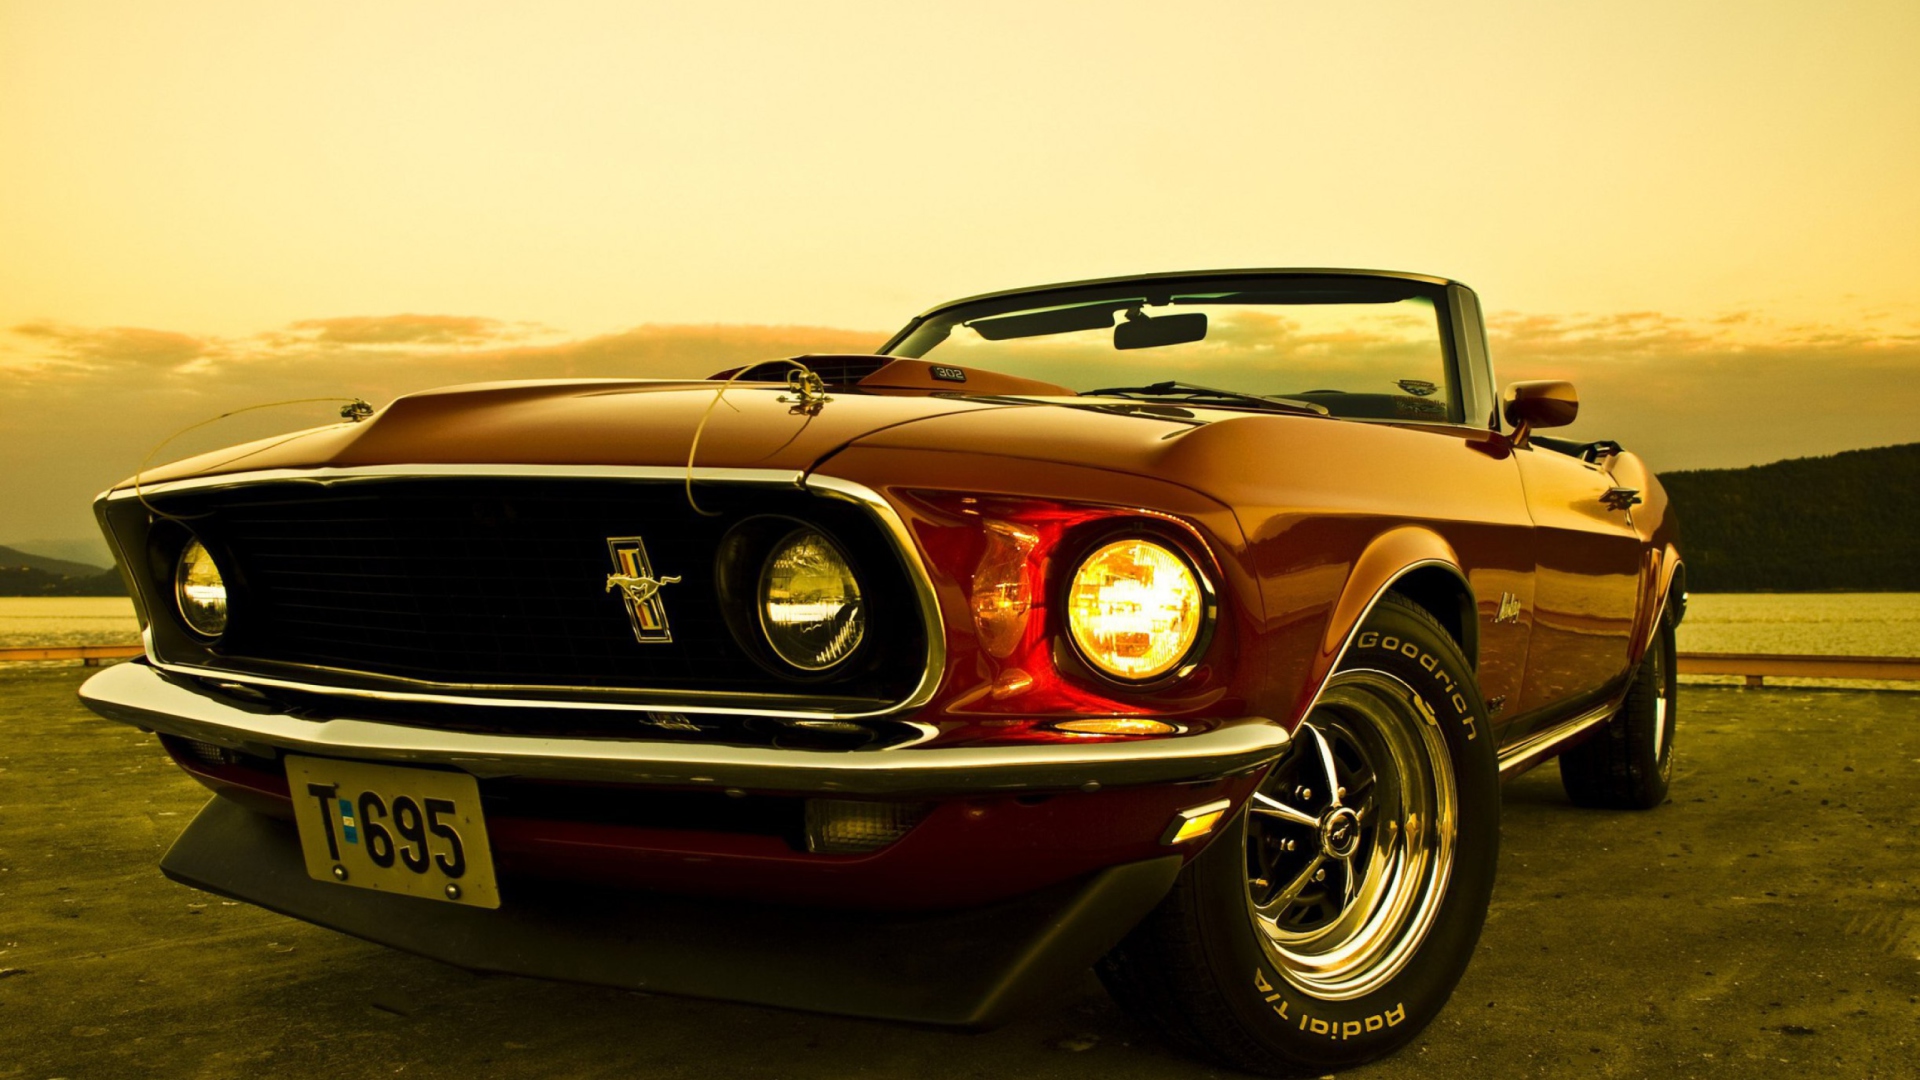 1969 Ford Mustang wallpaper 1920x1080